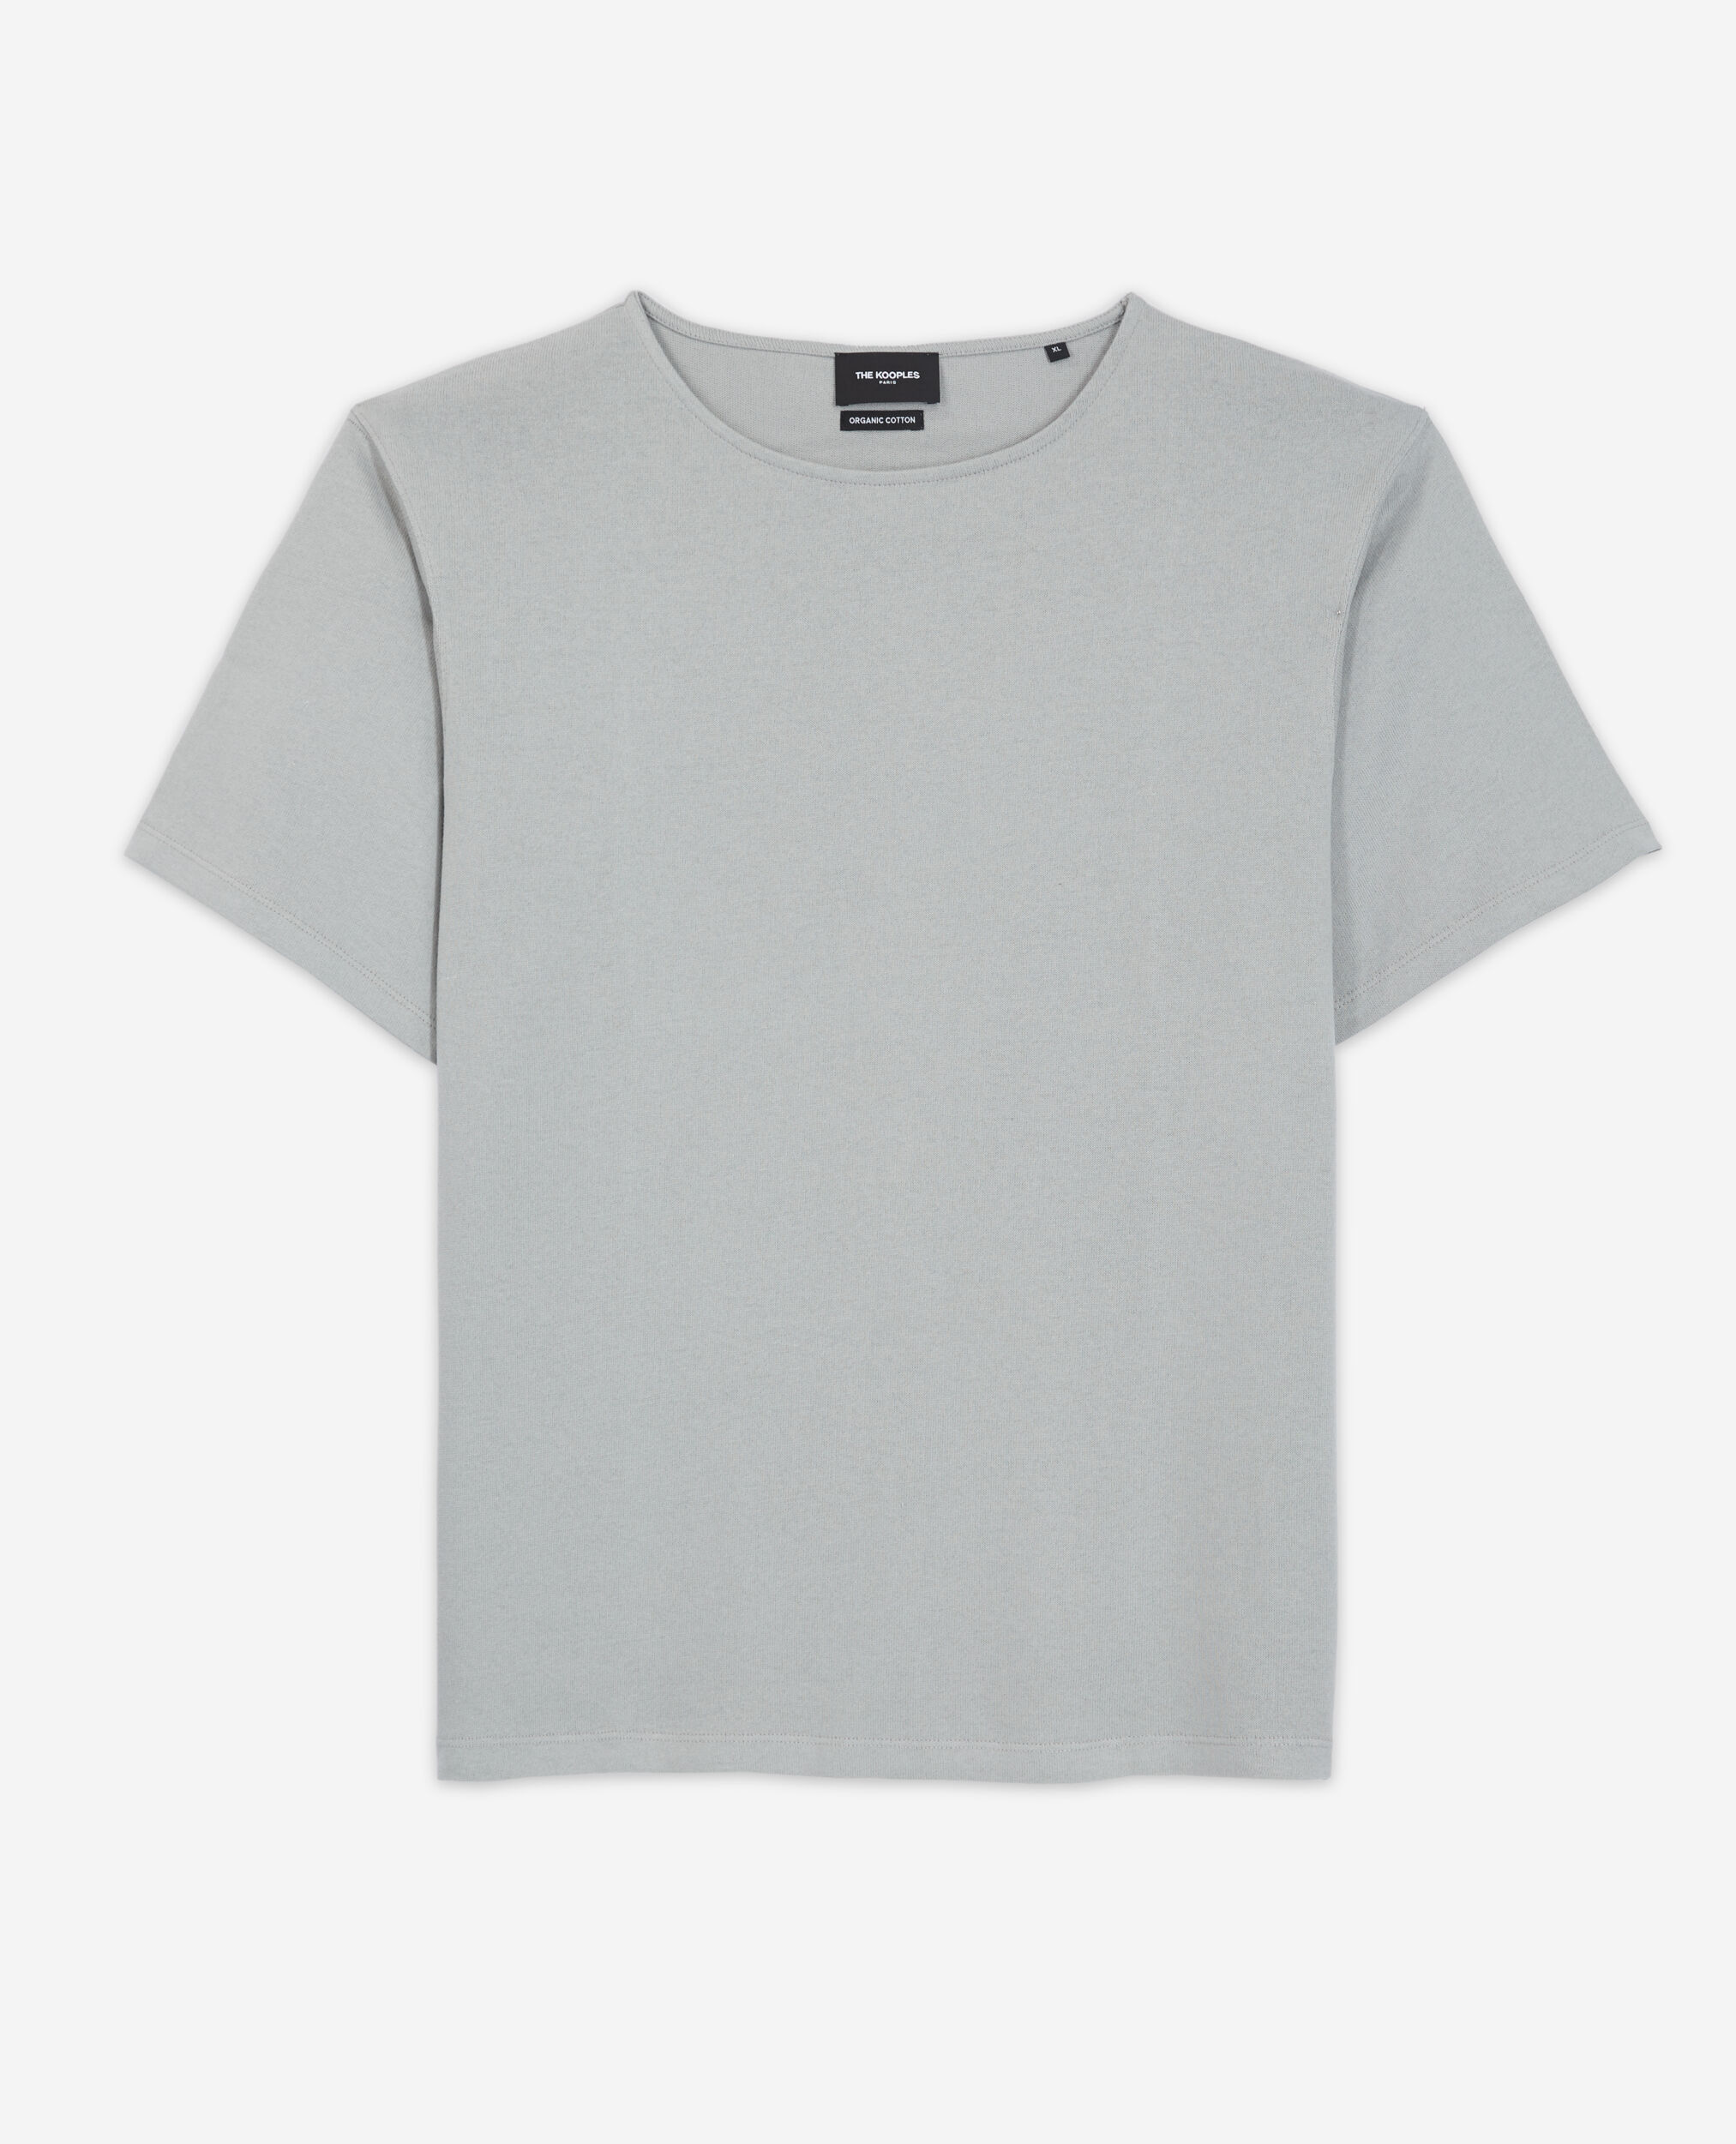 Grey T-shirt, LIGHT GREY, hi-res image number null